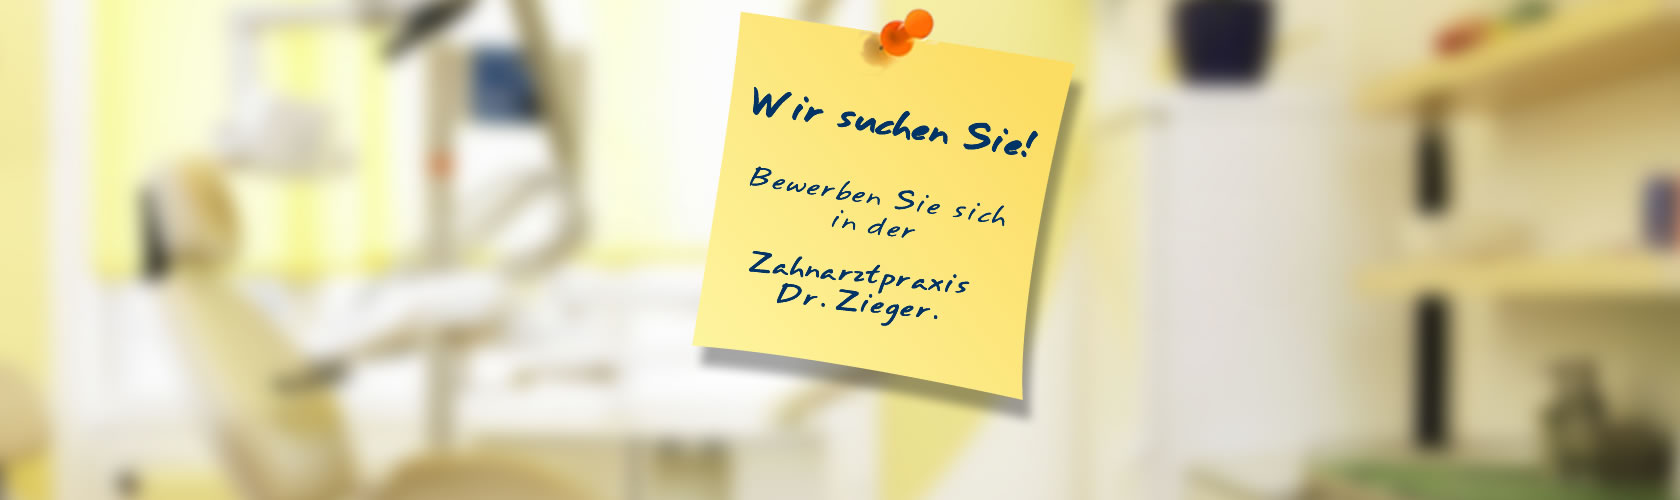 Dr. Zieger